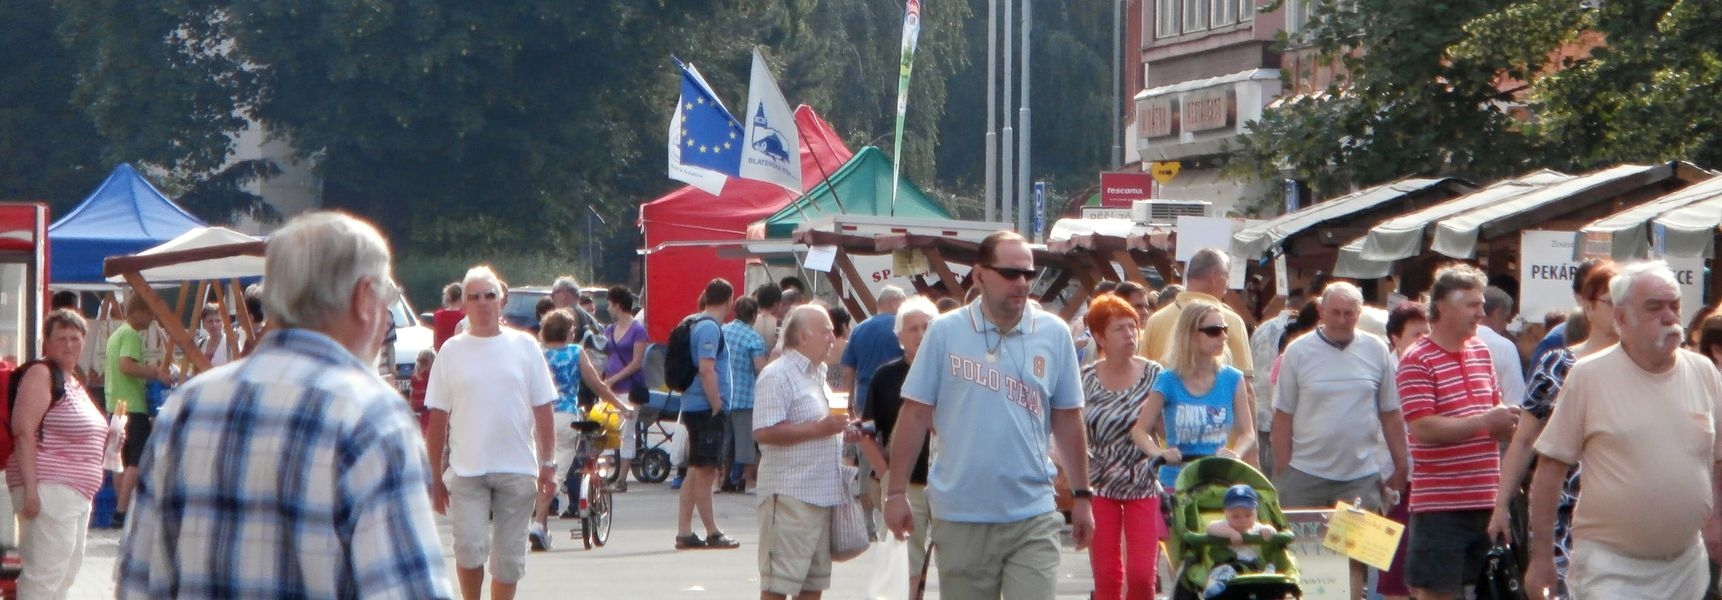 Farmářské trhy Šumperk - července 2013